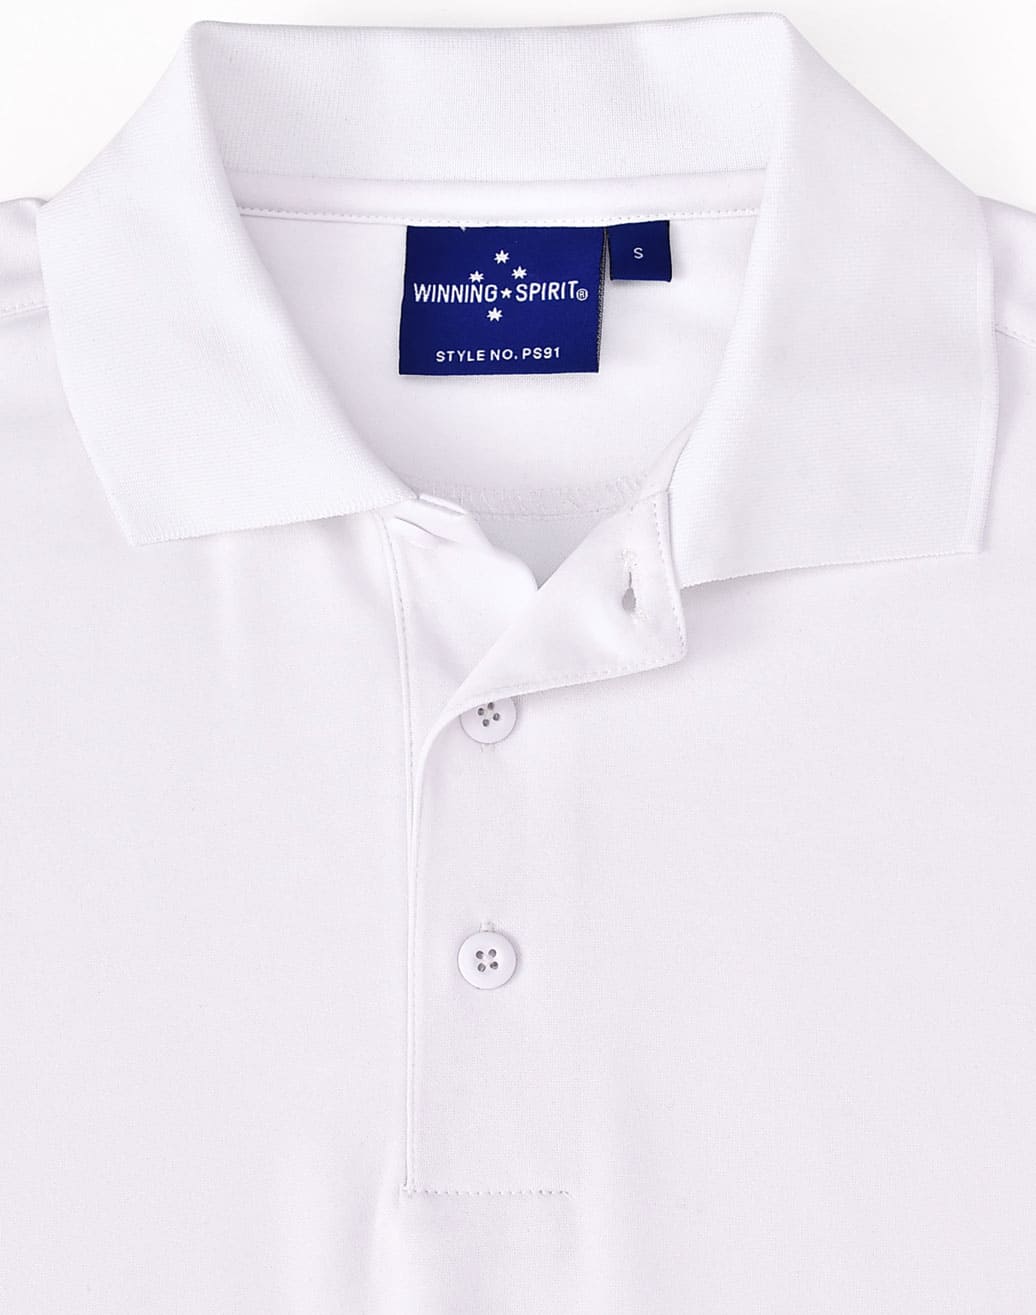 Custom Mens (Black) Corporate Branded Polo Shirts Cotton Online Perth Australia